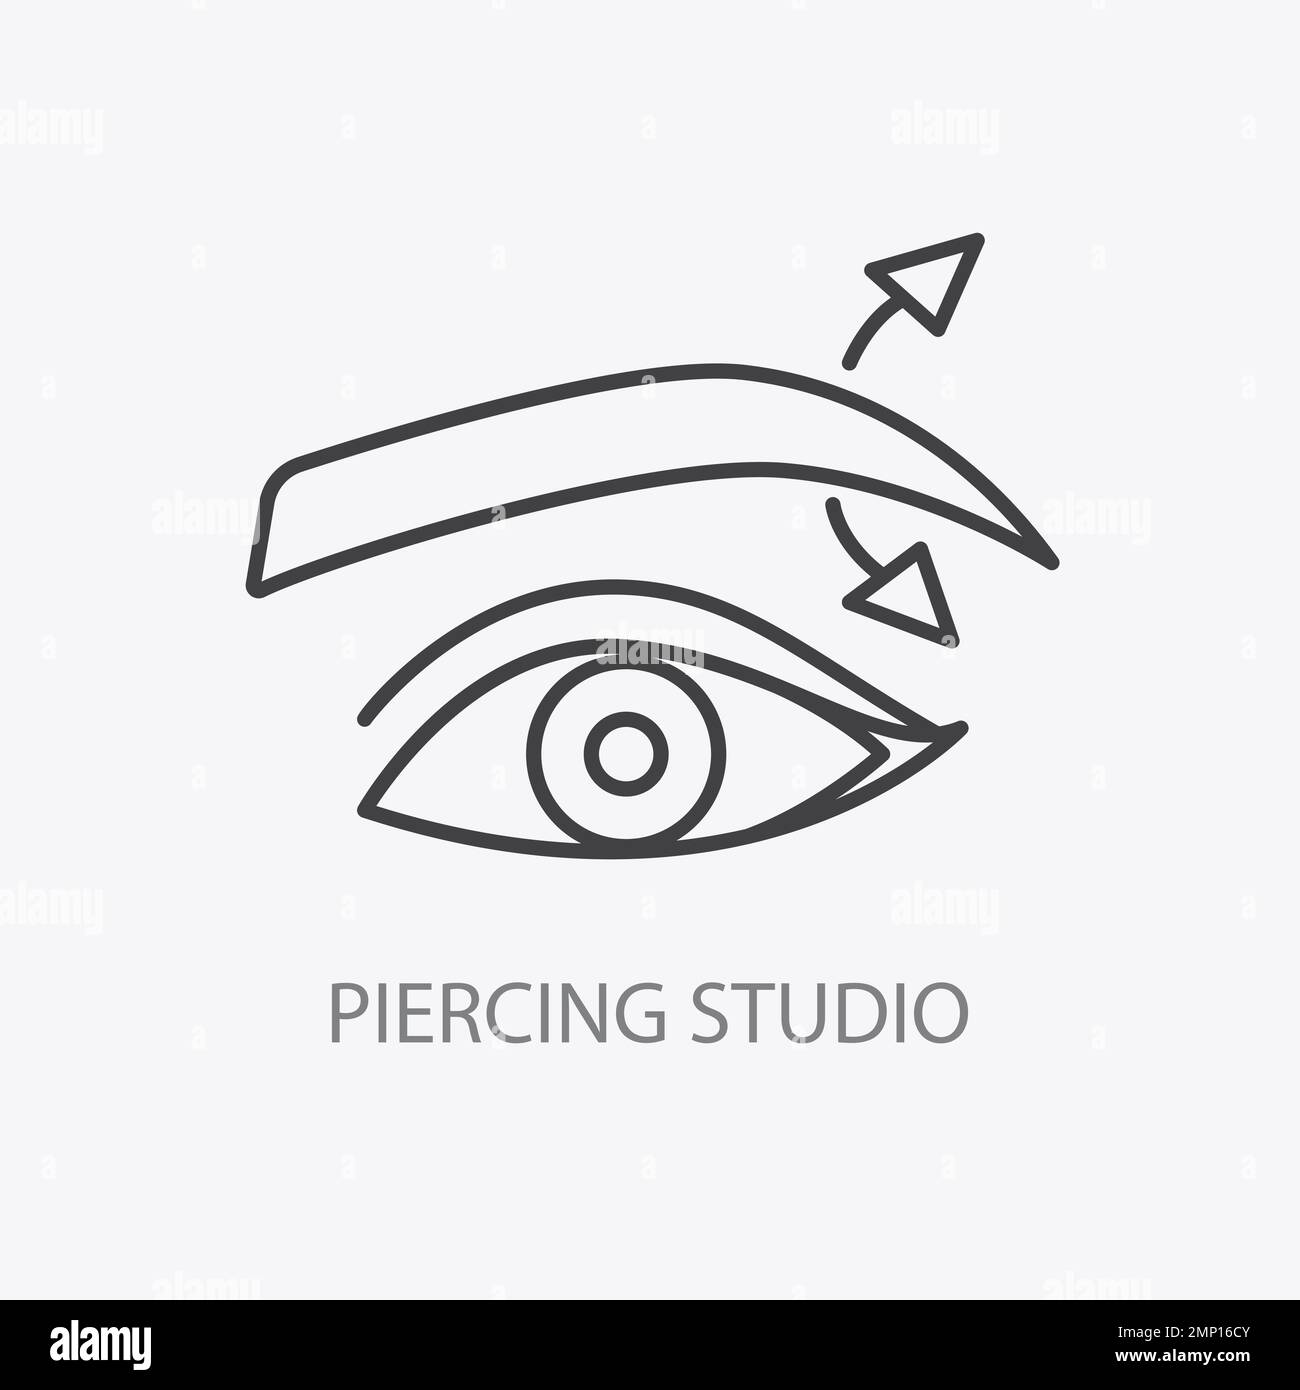 Piercing studio logo. Pierced eyebrow logotype Stock Vector